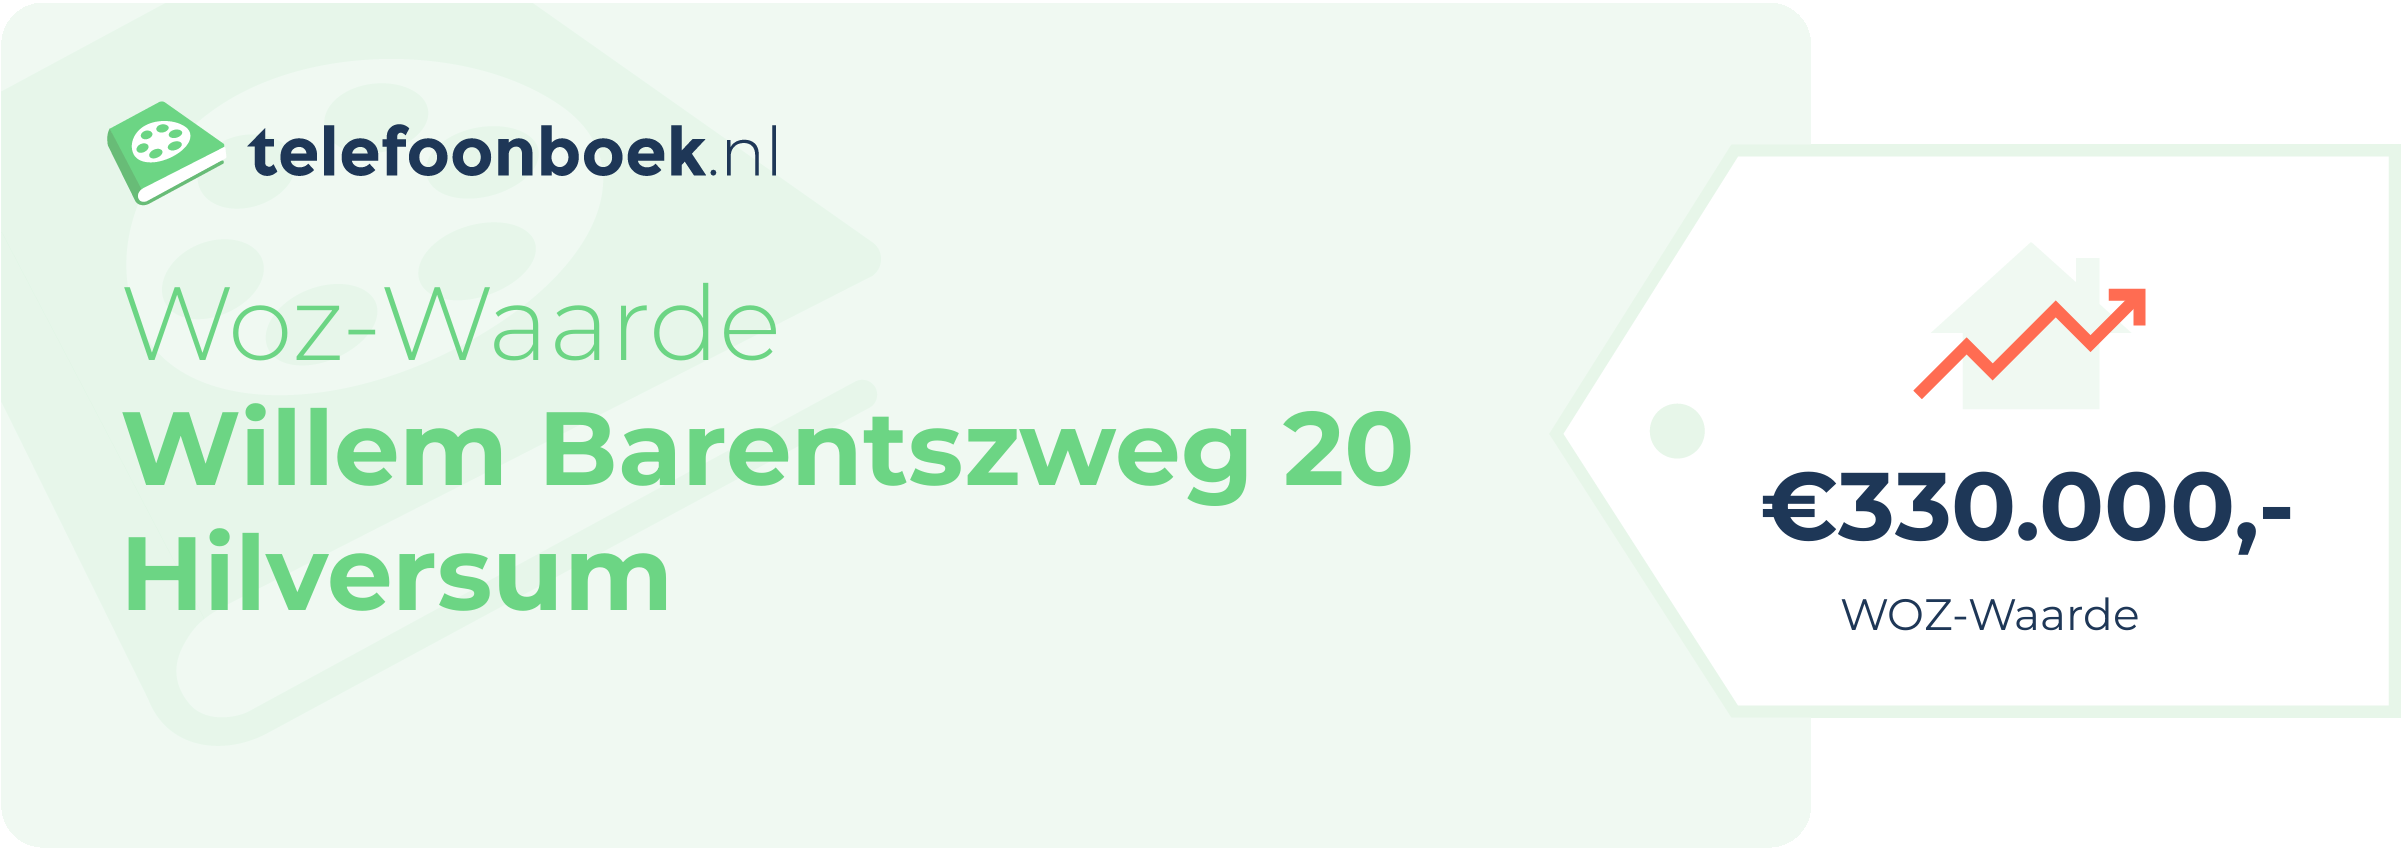 WOZ-waarde Willem Barentszweg 20 Hilversum